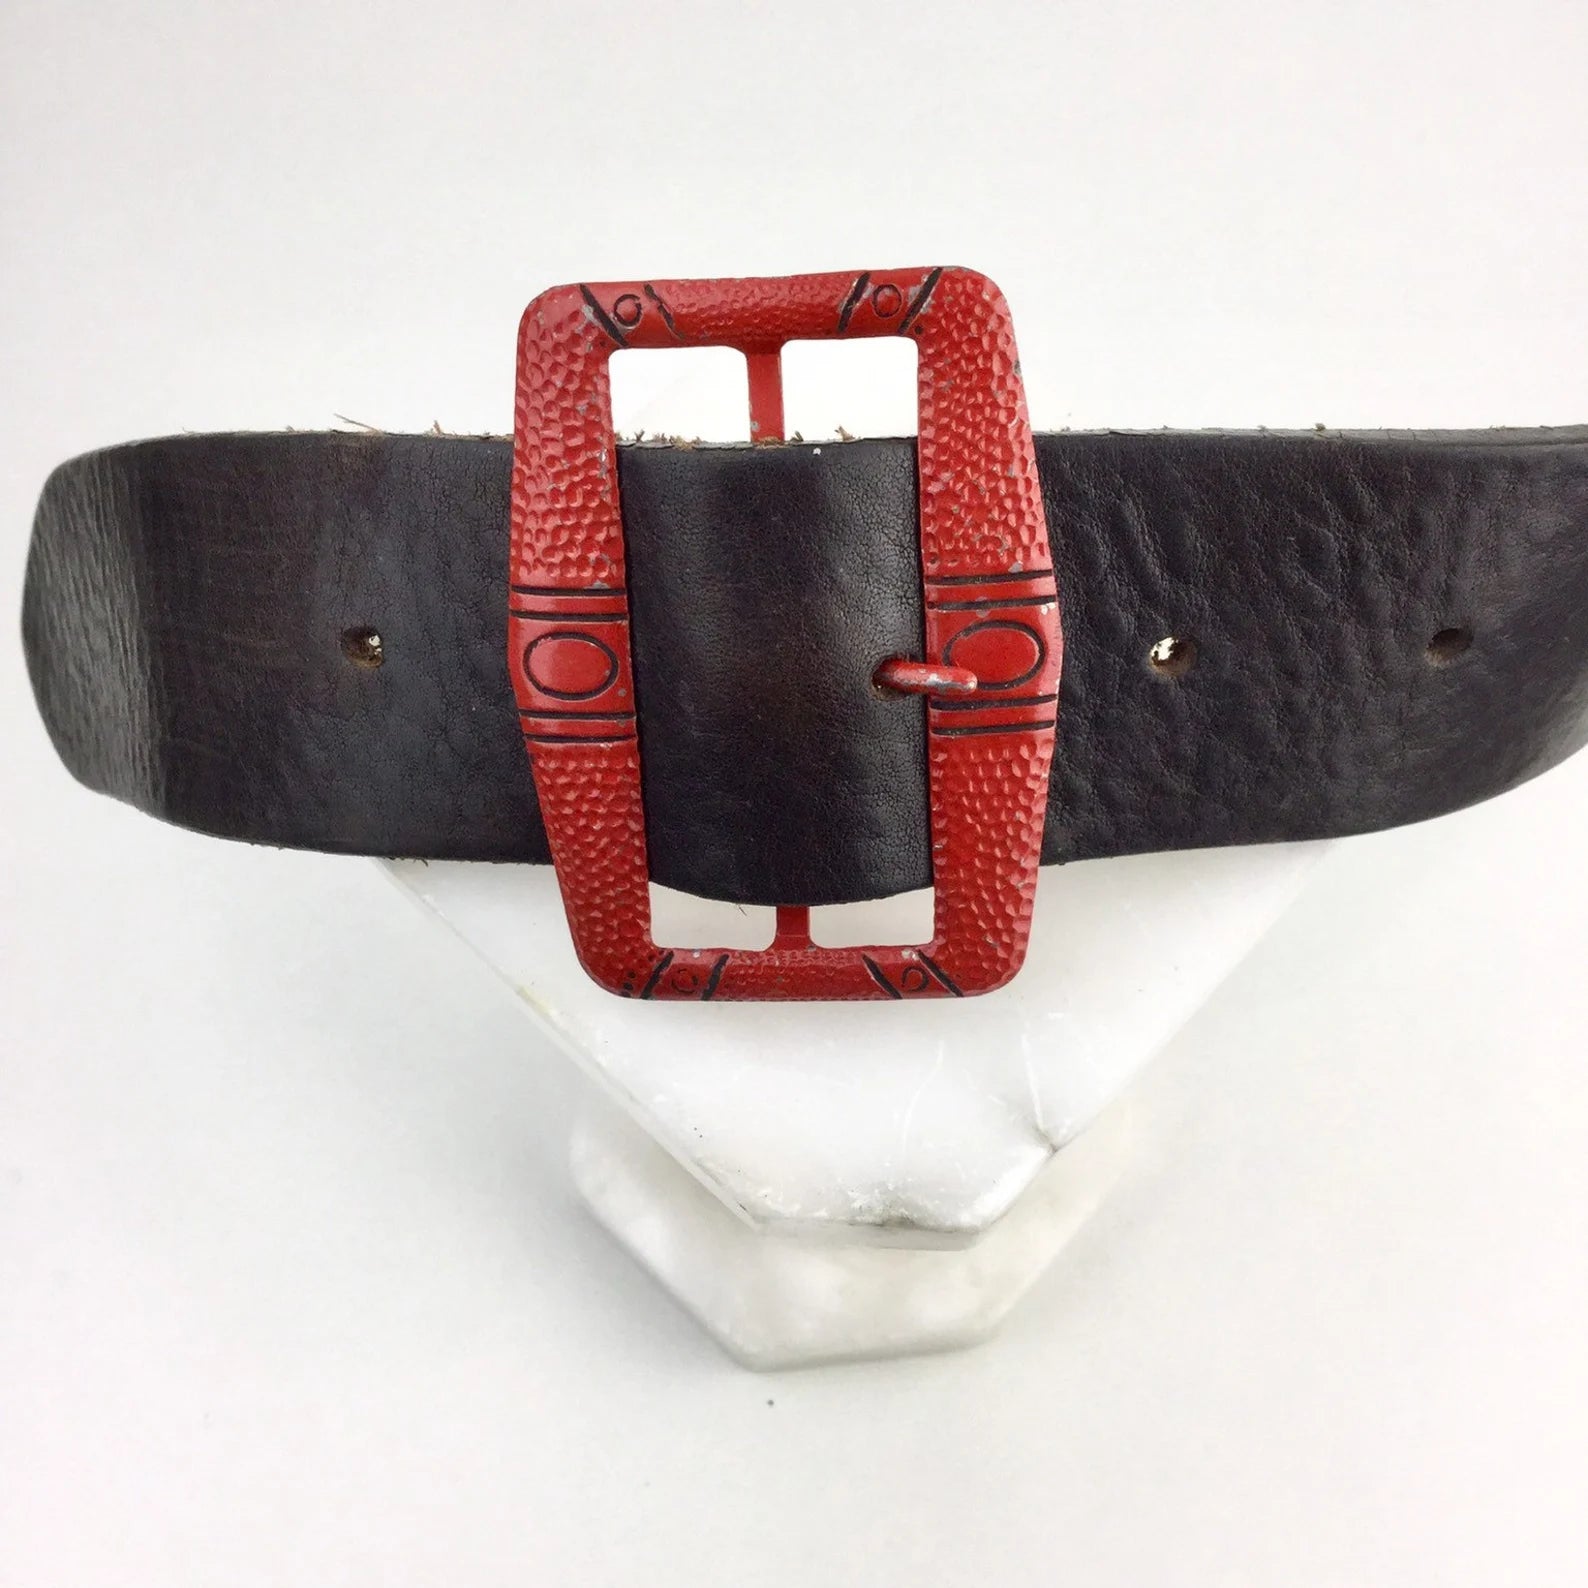 1920s Red Painted Belt Buckle, Antique Art Deco Flapper Belt Buckle, Rectangular Engraved Metal Buckle, 2.5"X1.5", Vintage Accessory